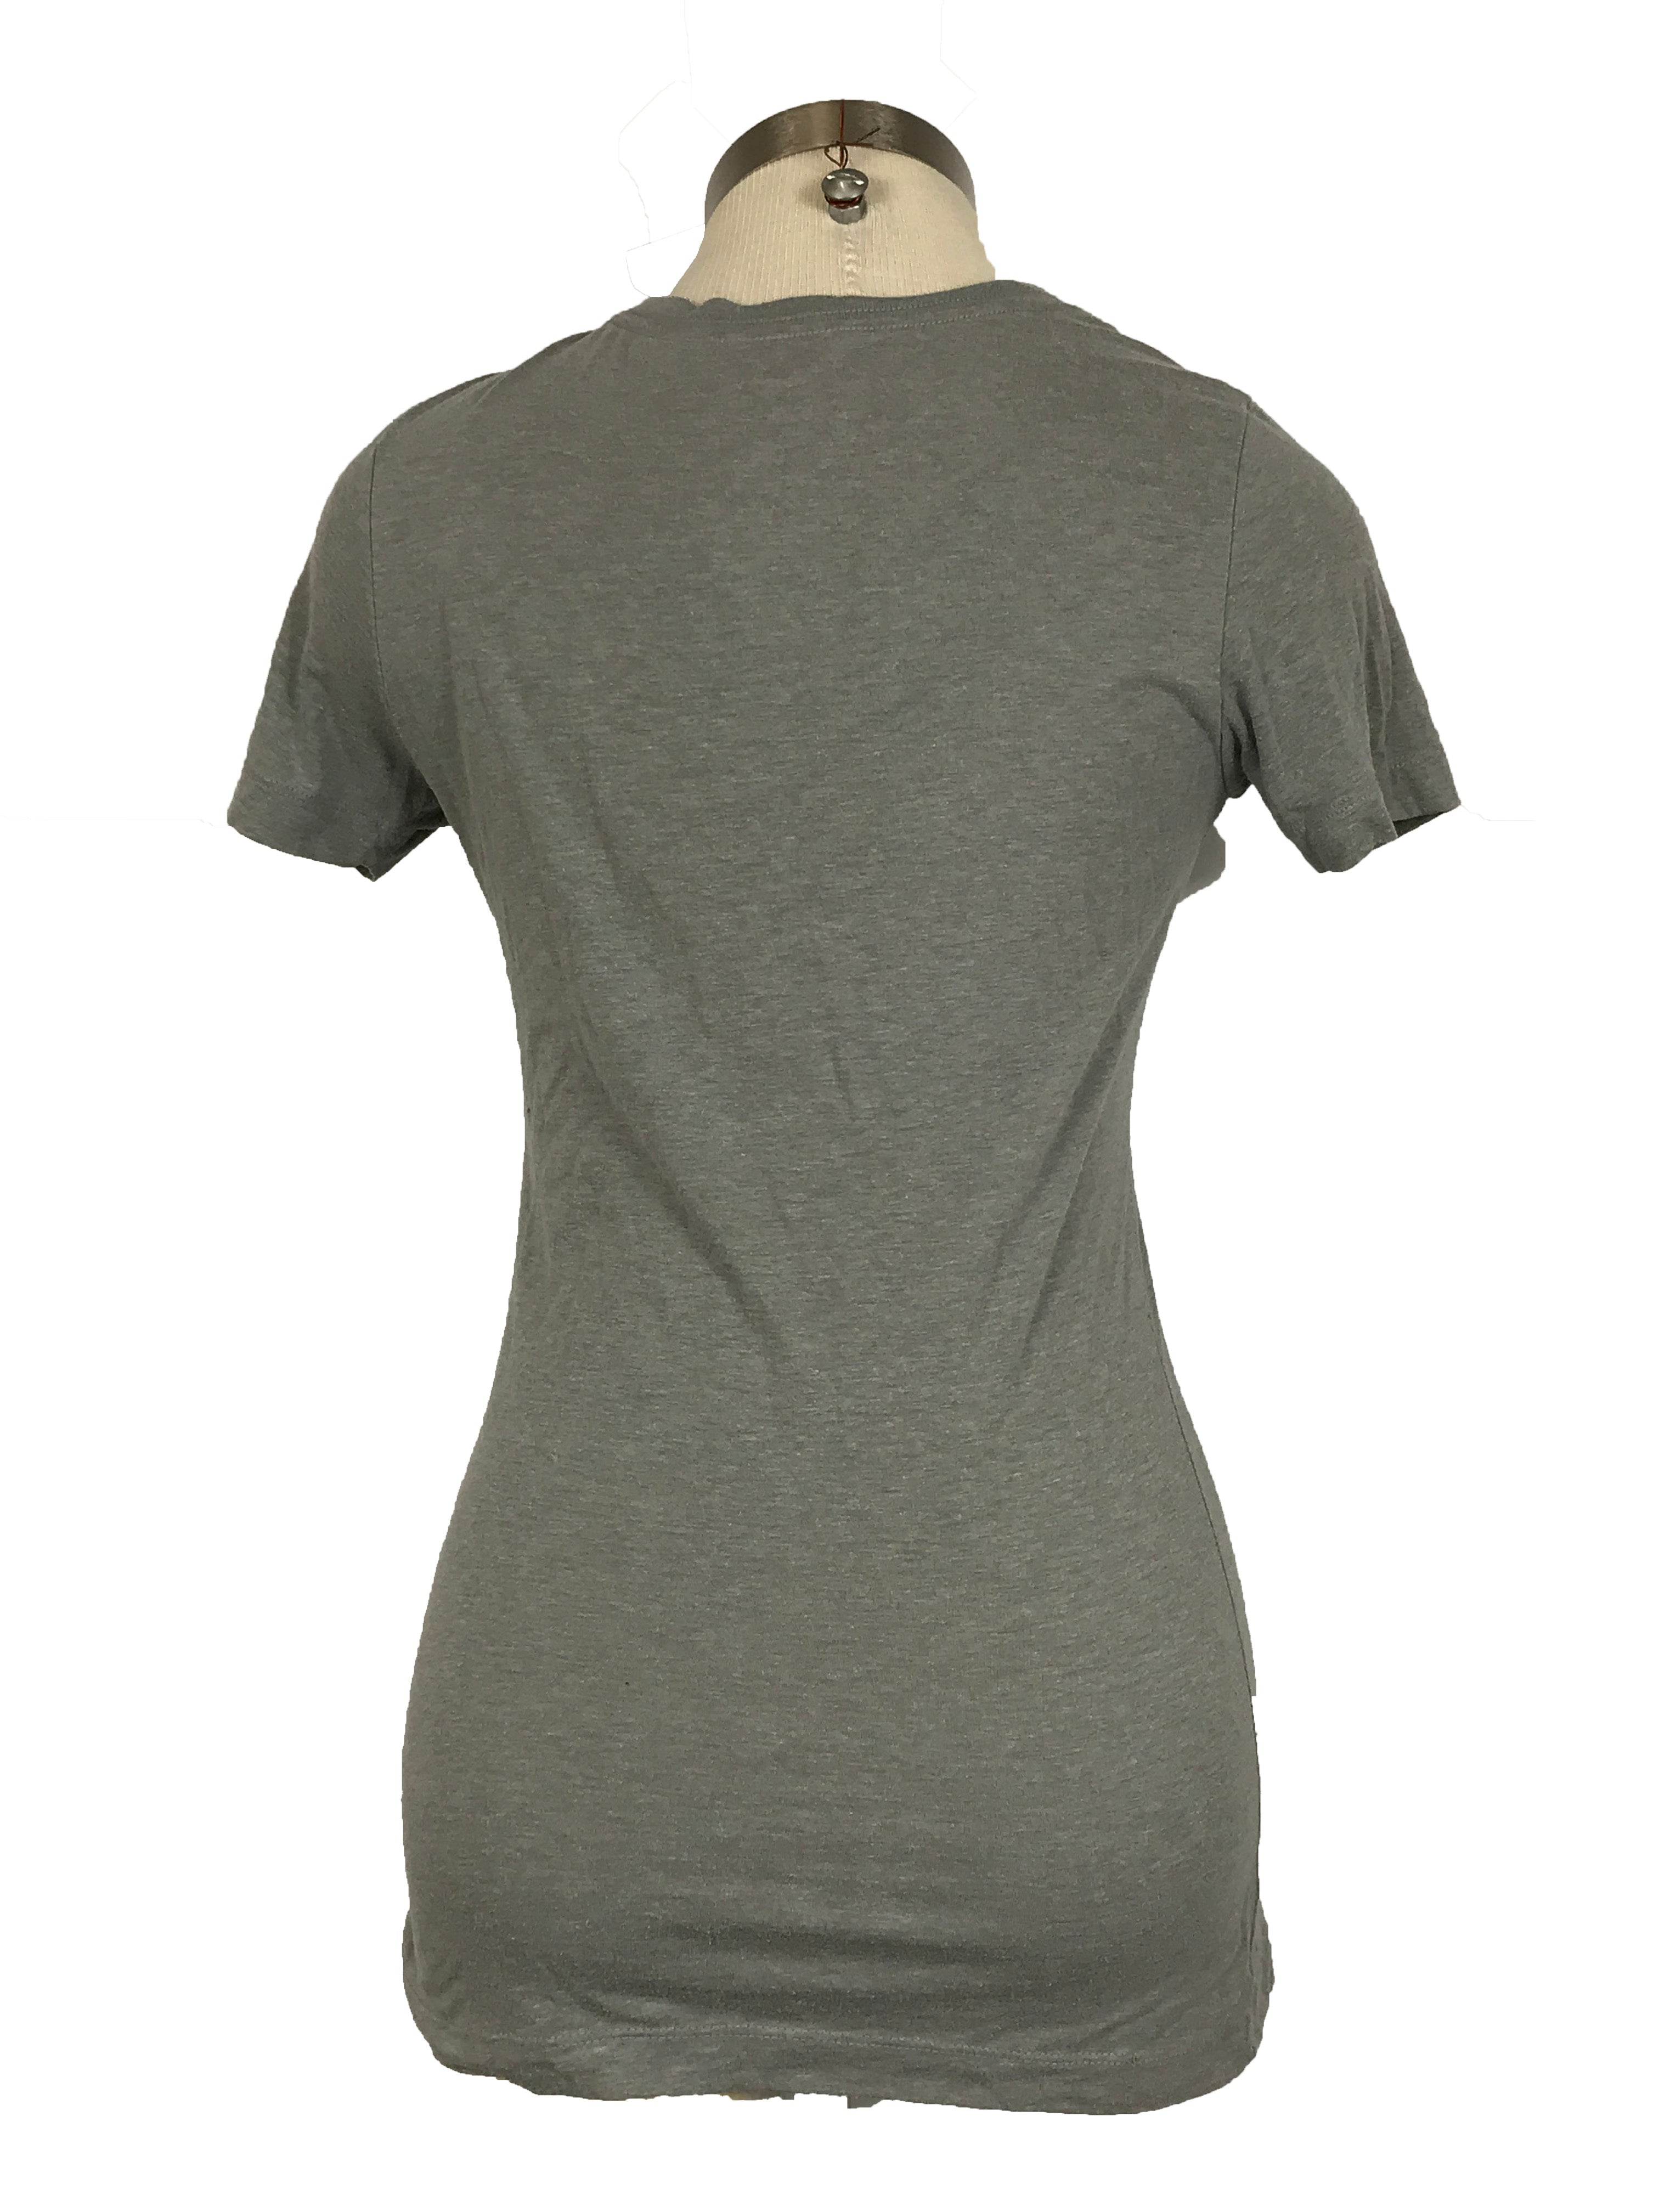 Nike Michigan State University Gray V-Neck T-Shirt Women's Size Medium